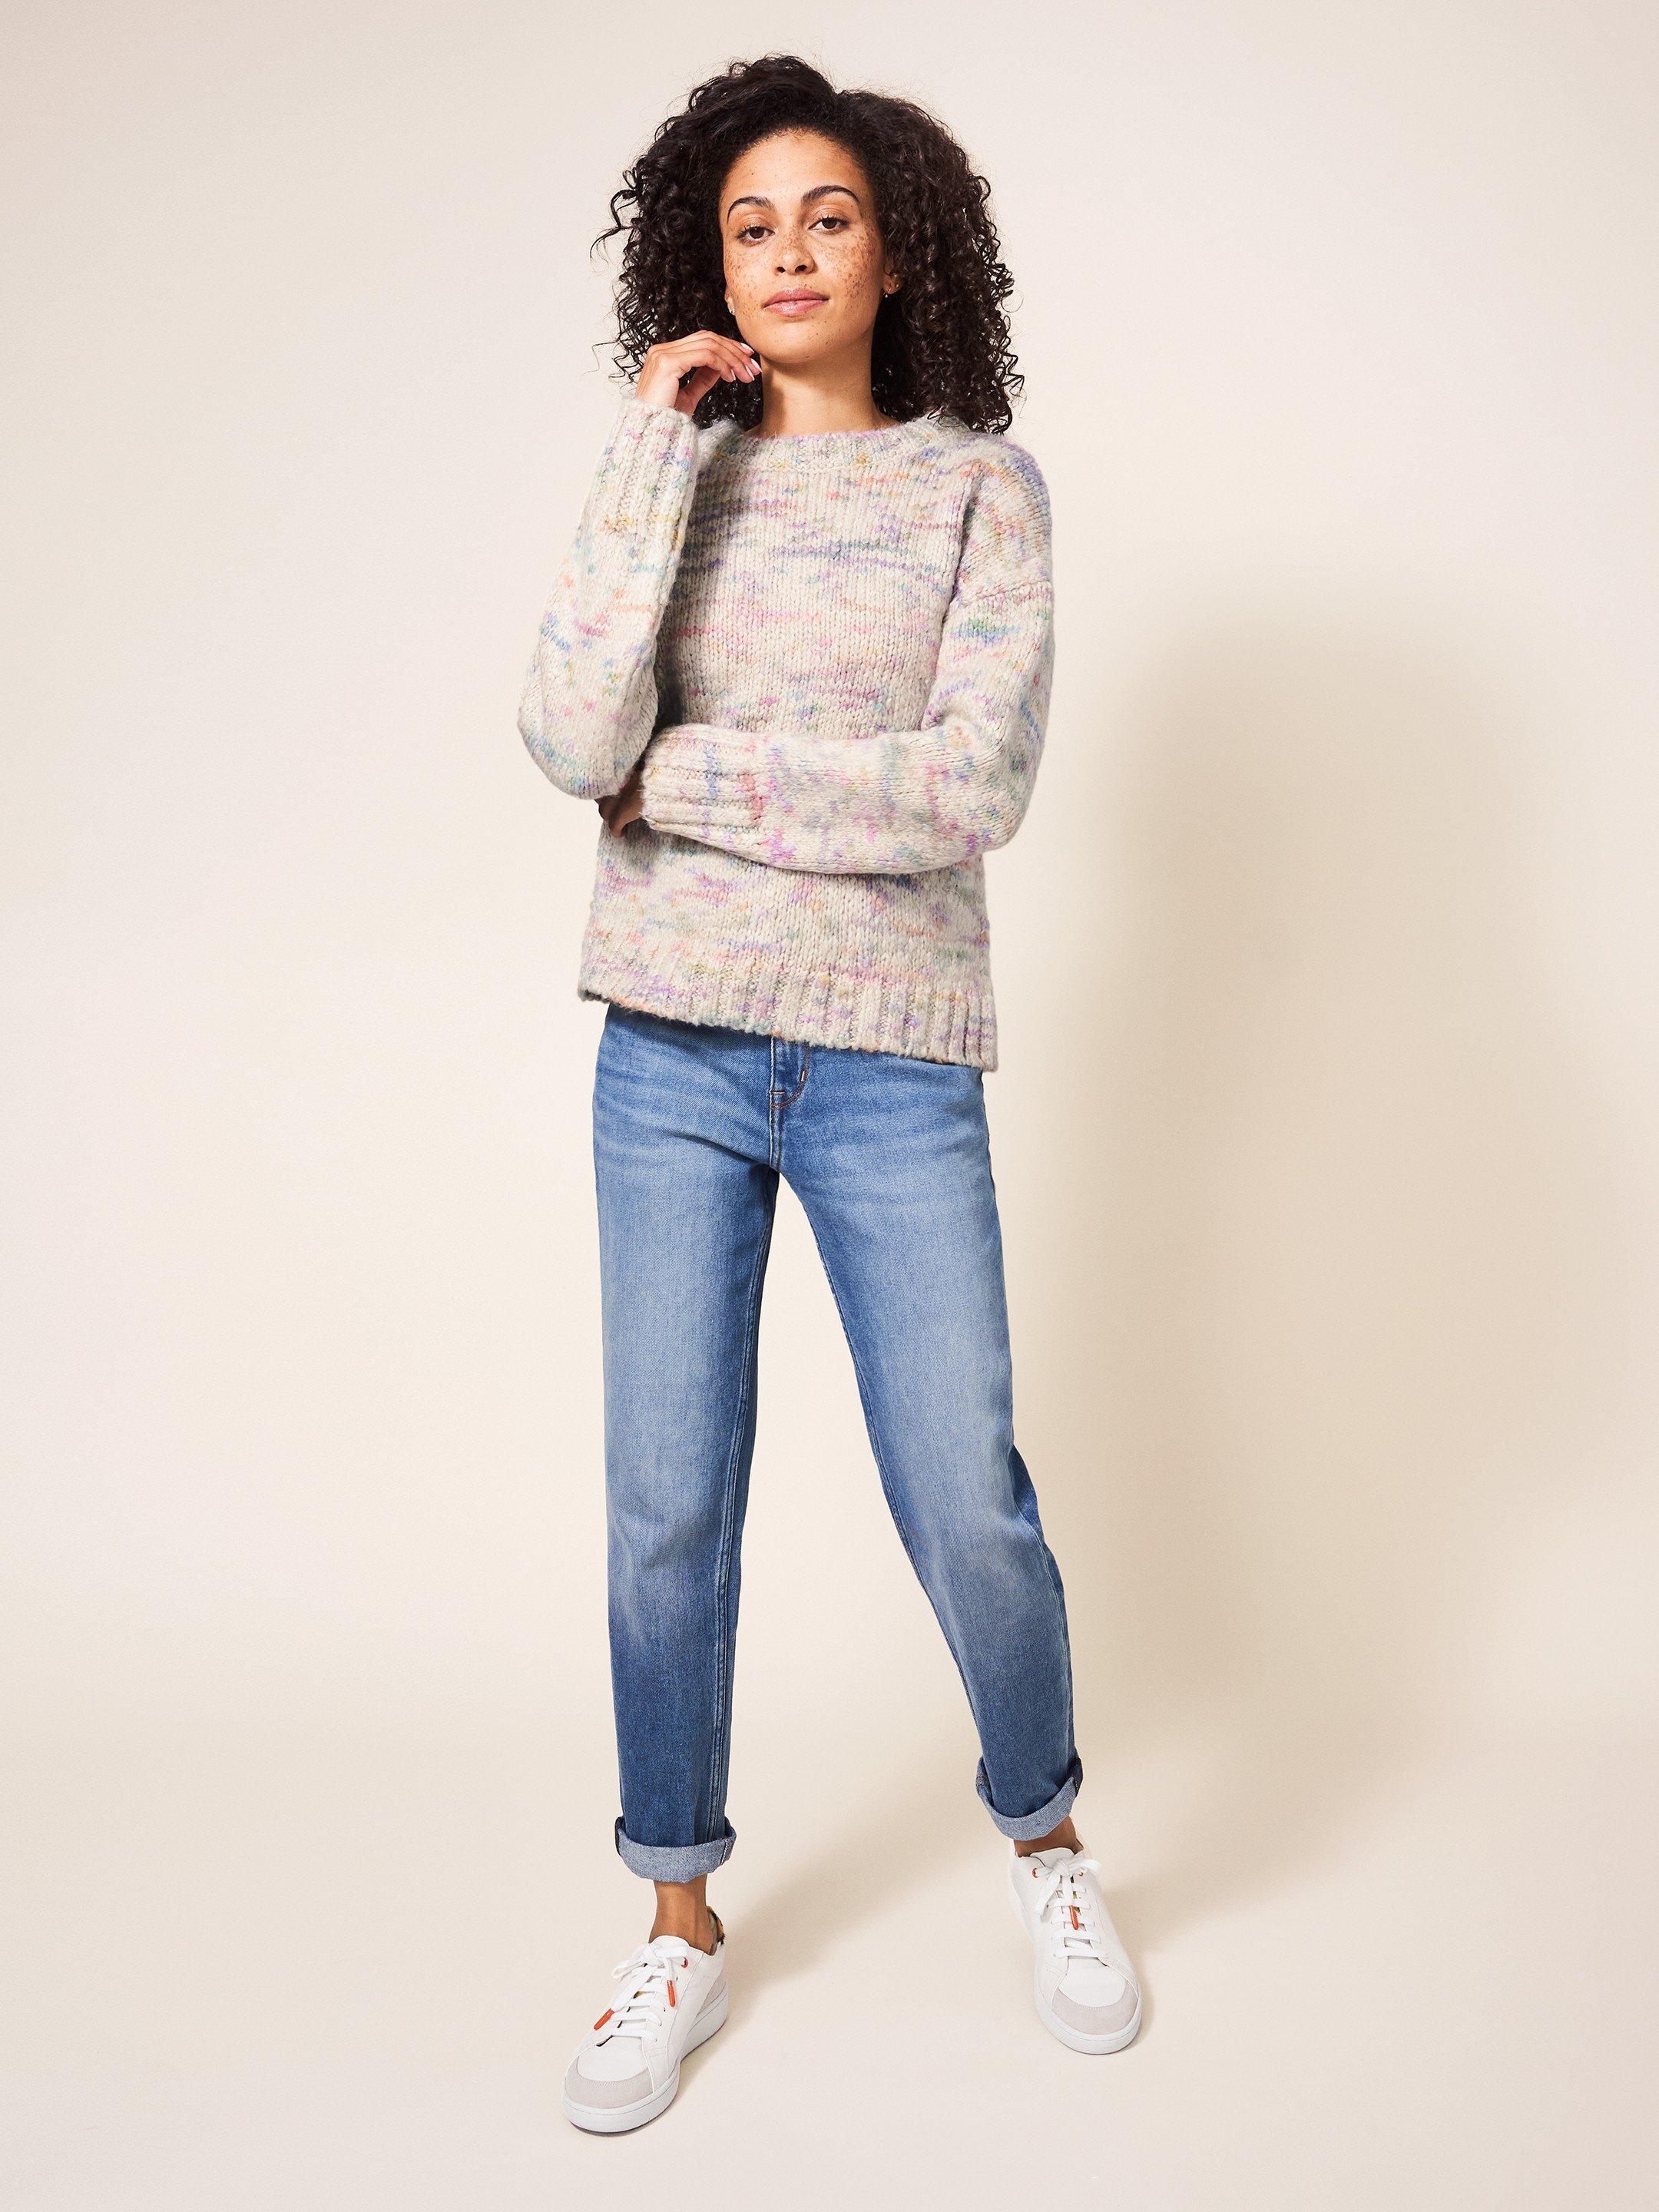 Snug City Sweater in NAT MLT - MODEL FRONT